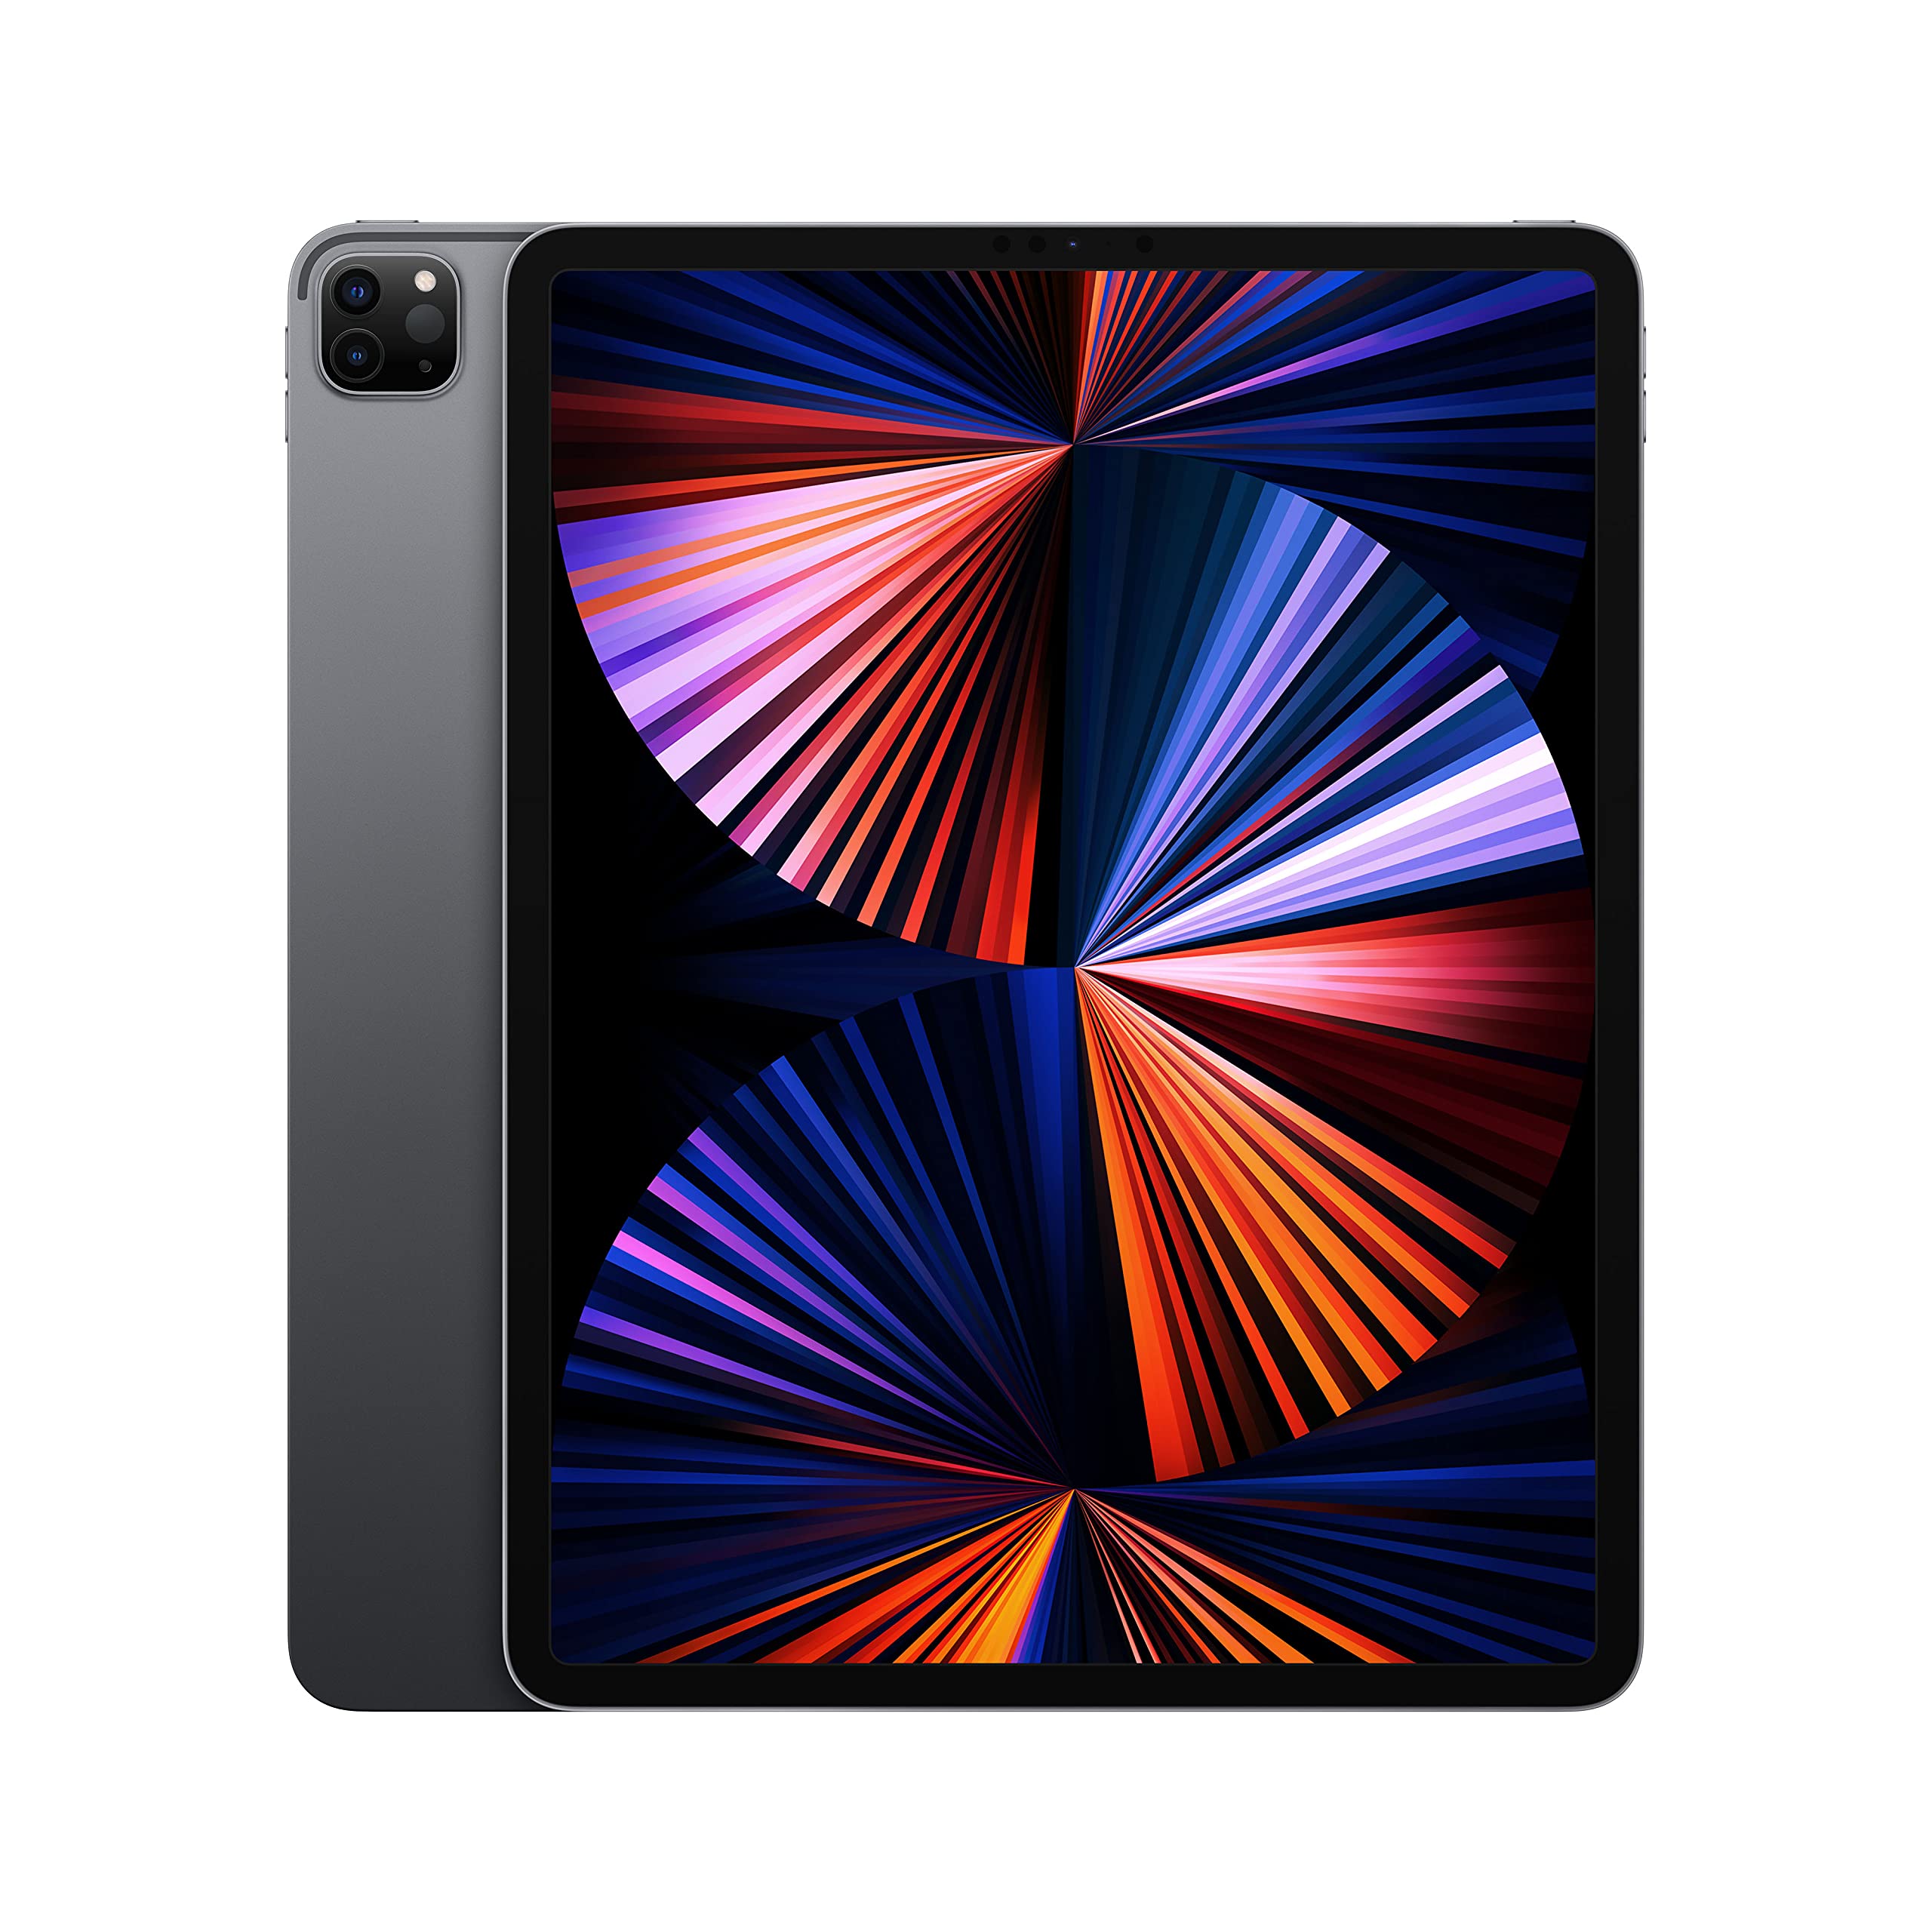 2021 Apple iPad Pro (12.9-inch, Wi-Fi, 512GB) - Space Grey (5th Generation)